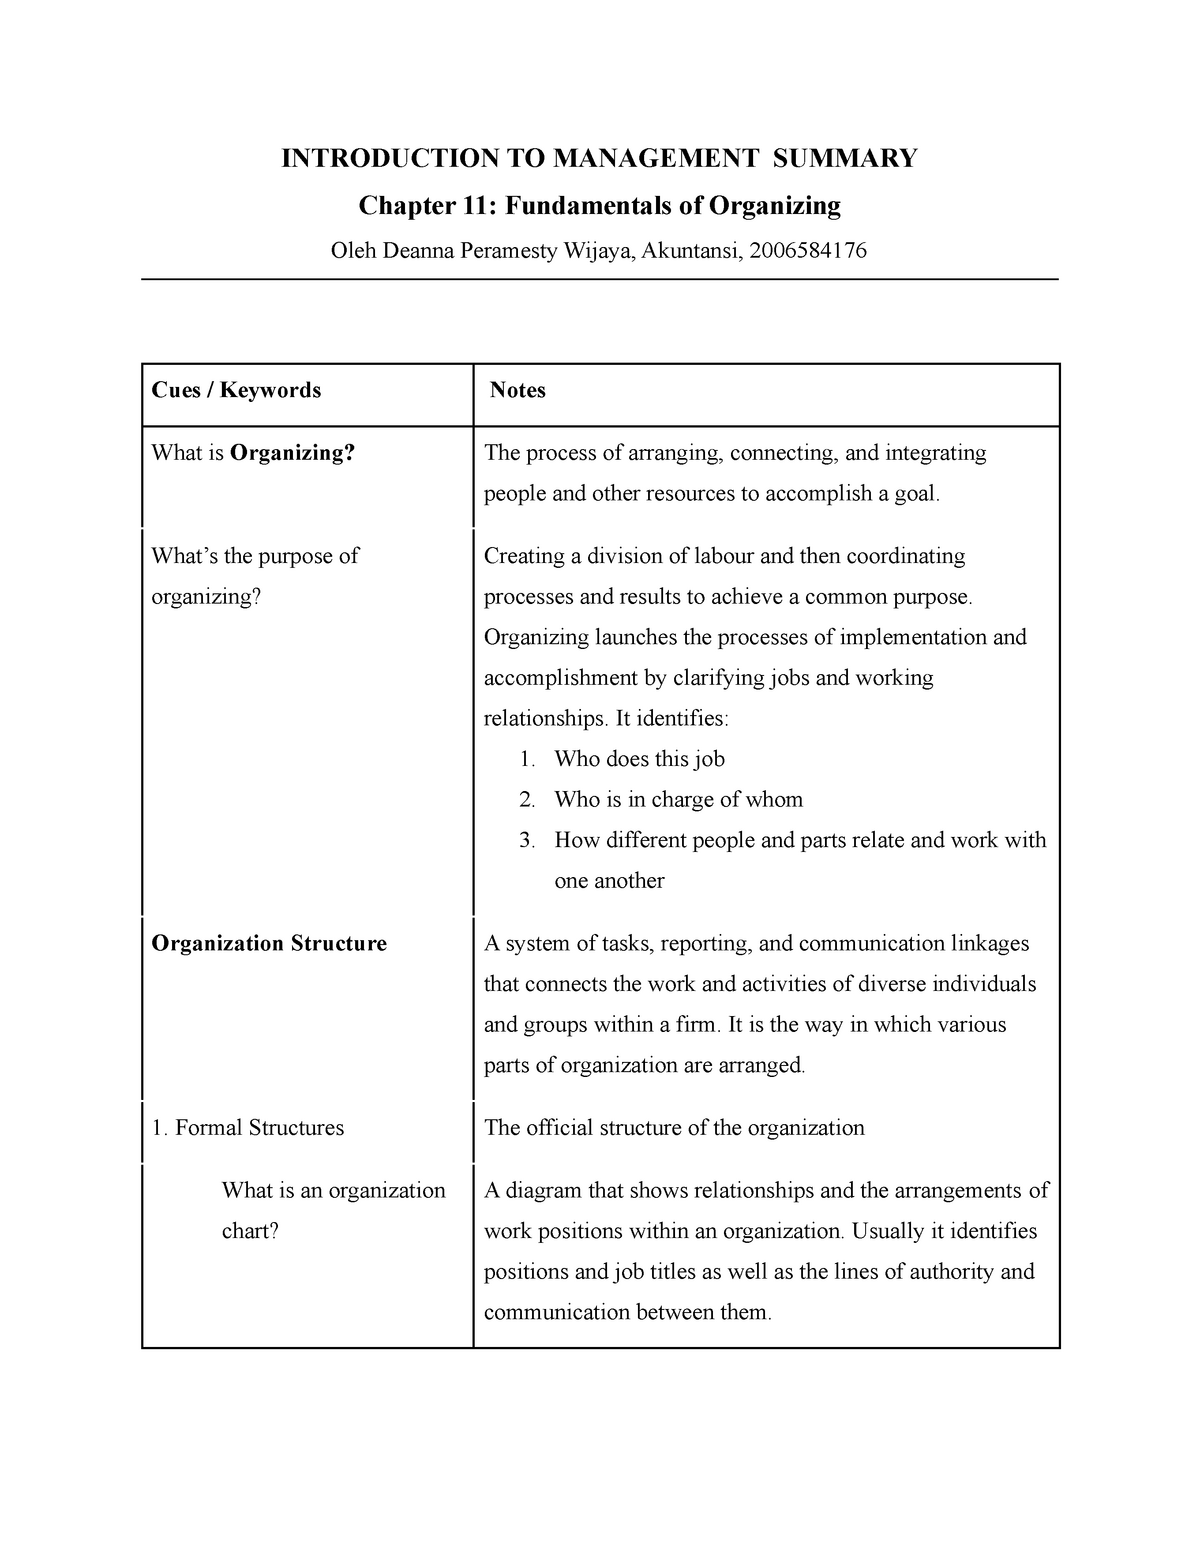 Chapter 11 Summary Pengantar Manajemen UI 2020/2021 - INTRODUCTION TO ...